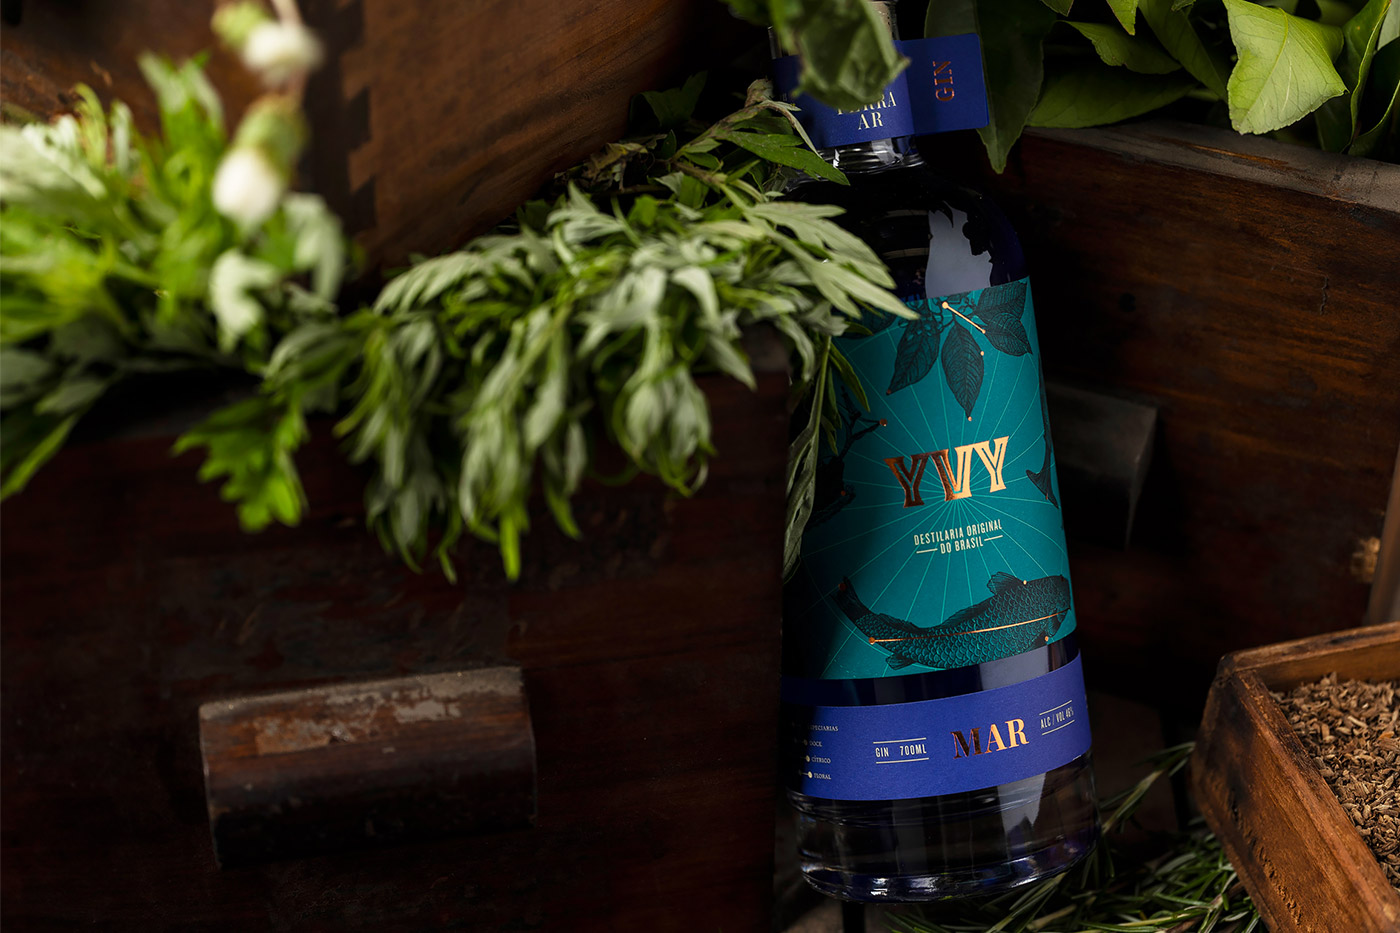 Yvy Mar酒品牌和包装设计